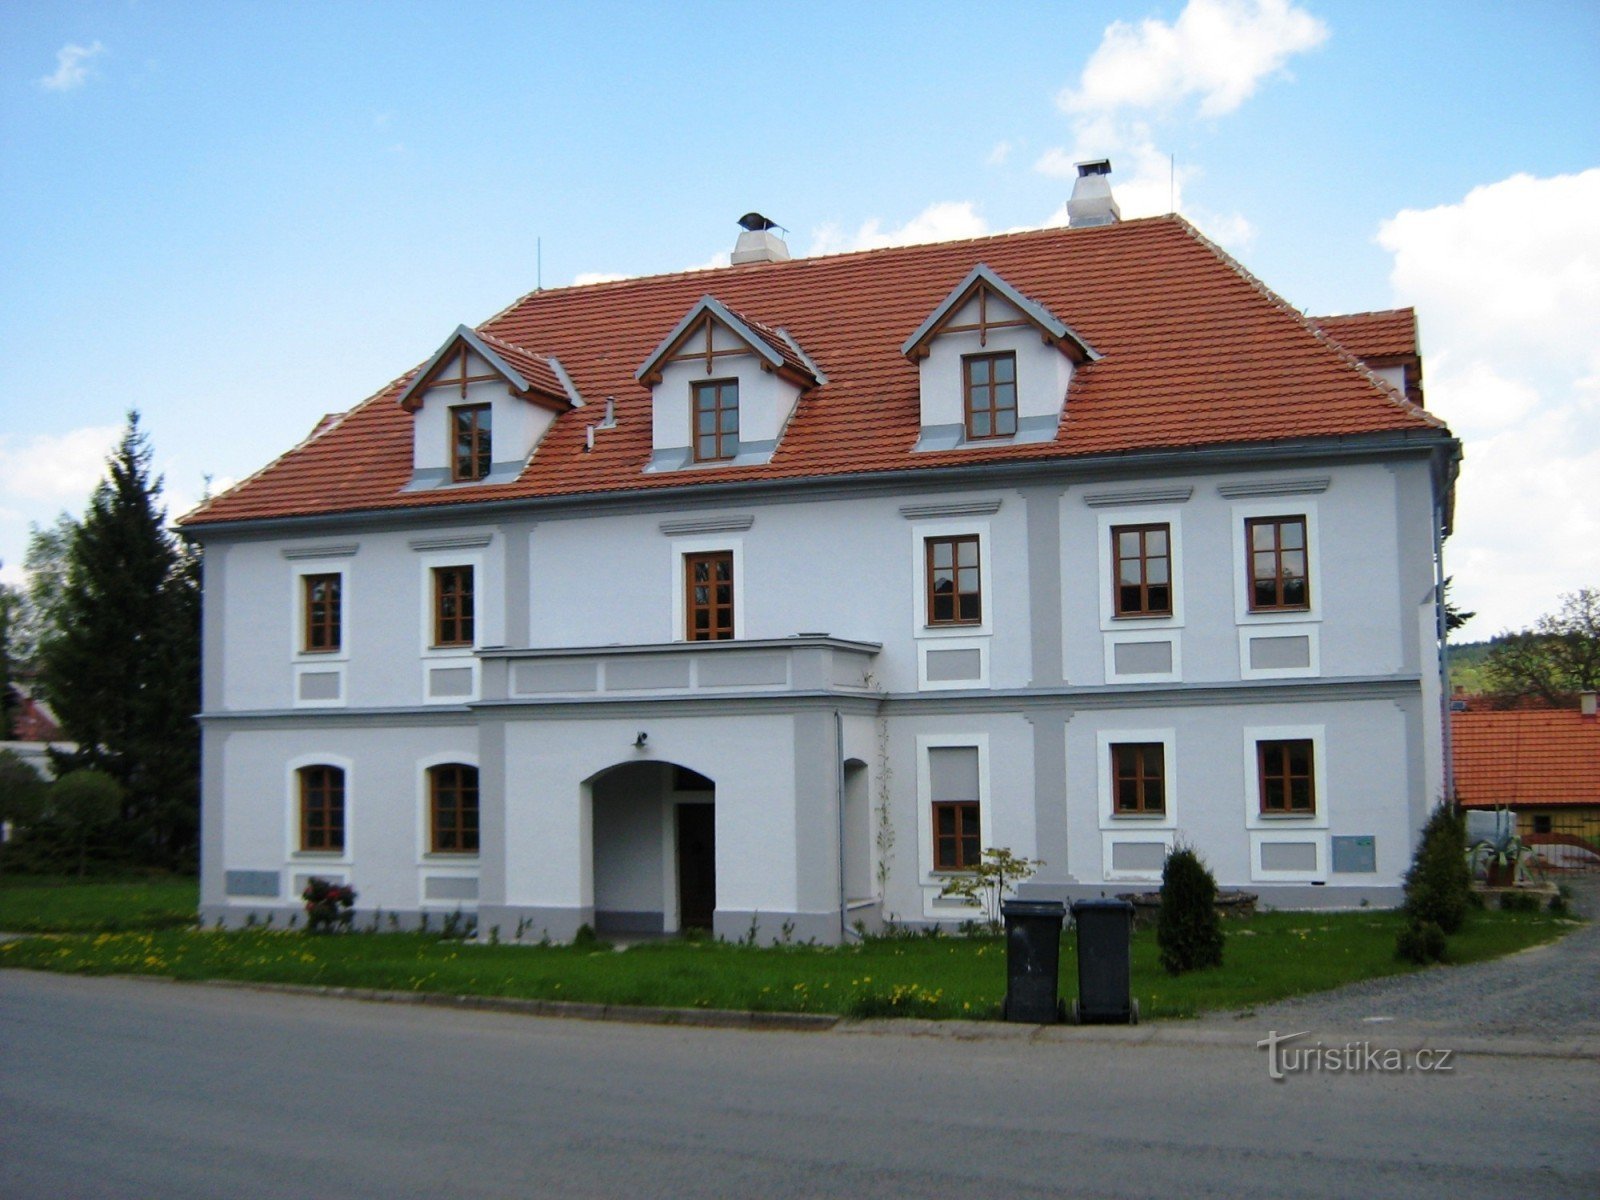 Spahus i landsbyen nær Volfů